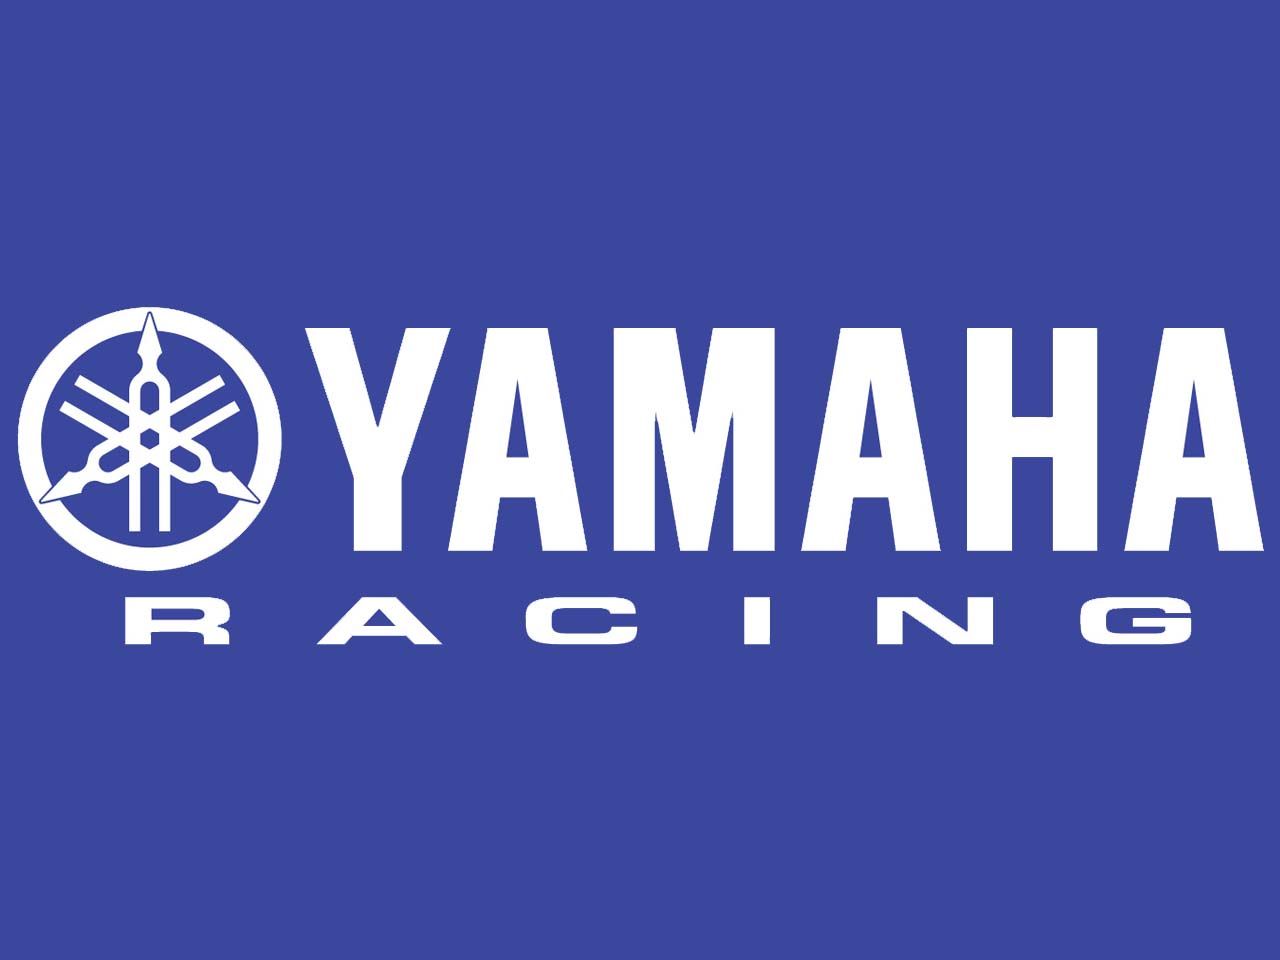 Yamaha racing logo wallpapers